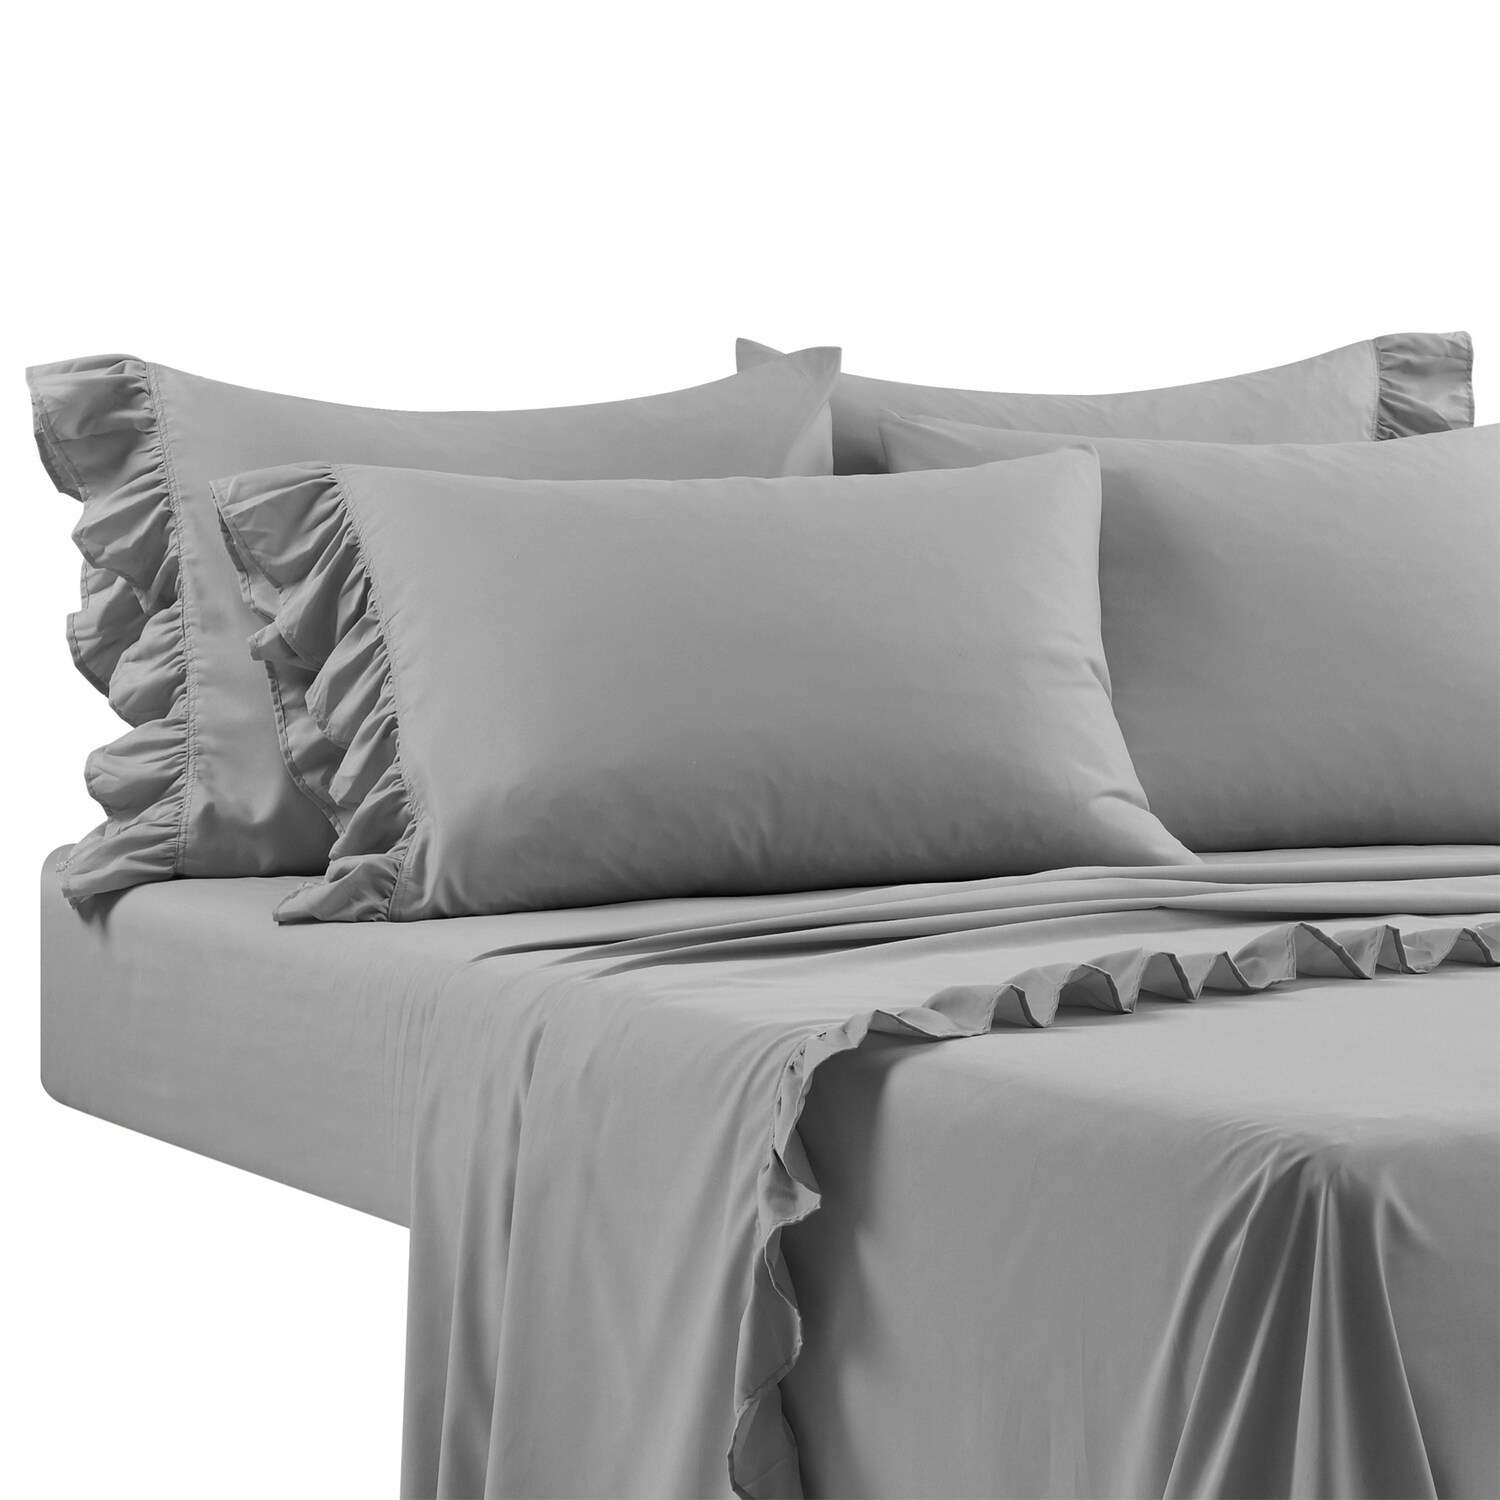 Lush Decor Dark Gray Solid Full Bedspread in the Comforters ...